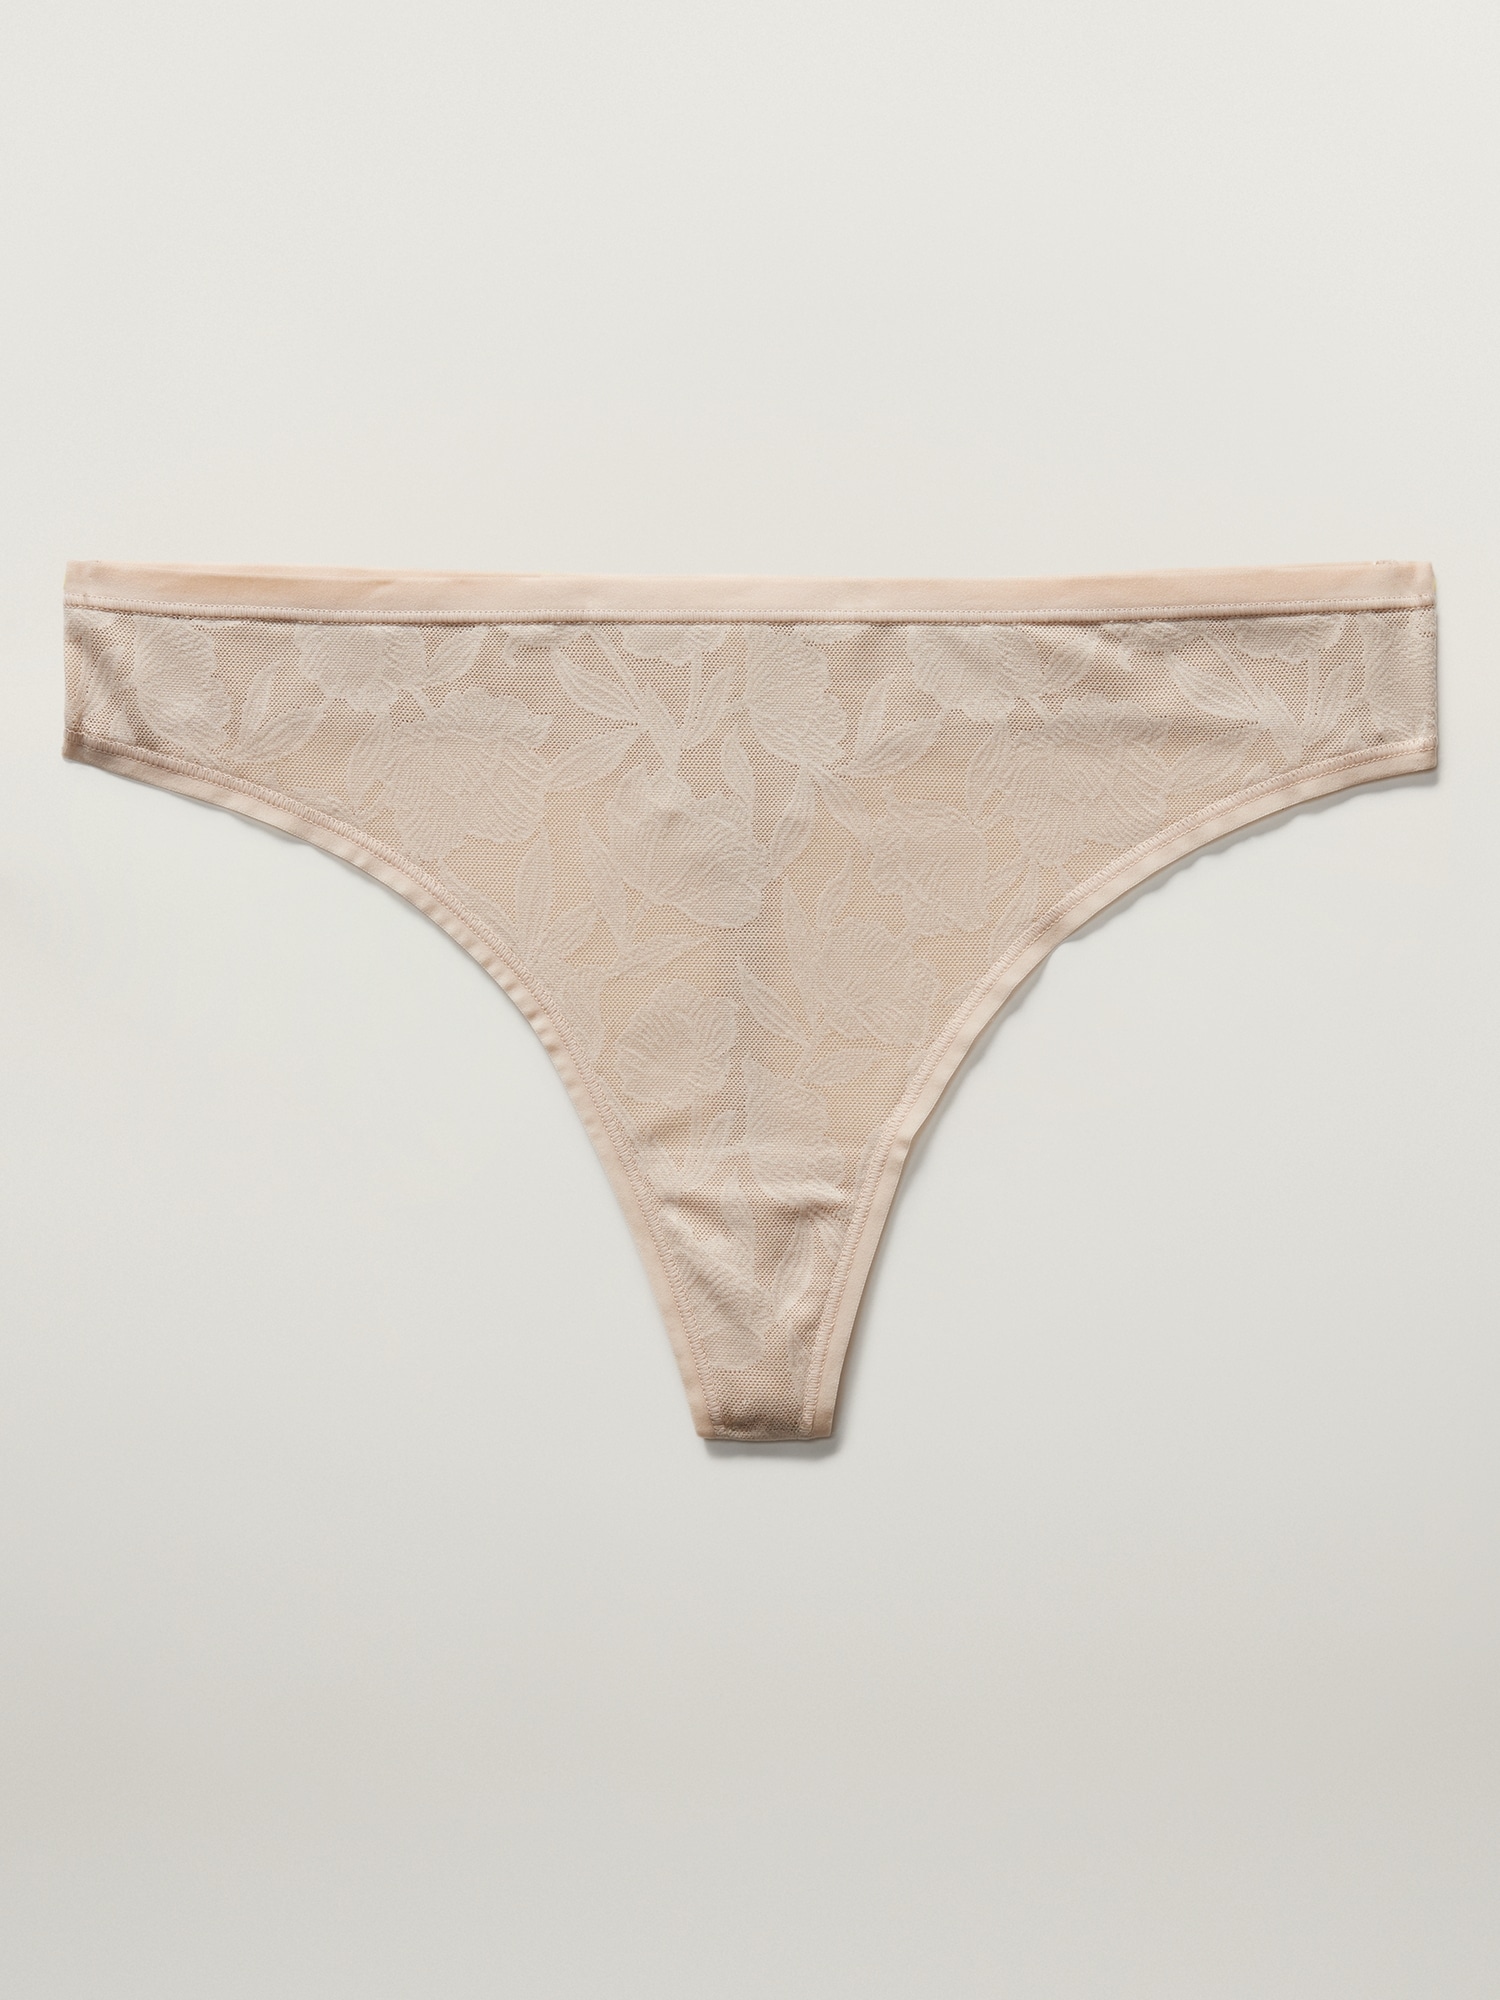 Athleta Ritual Thong Underwear In Beige Lace